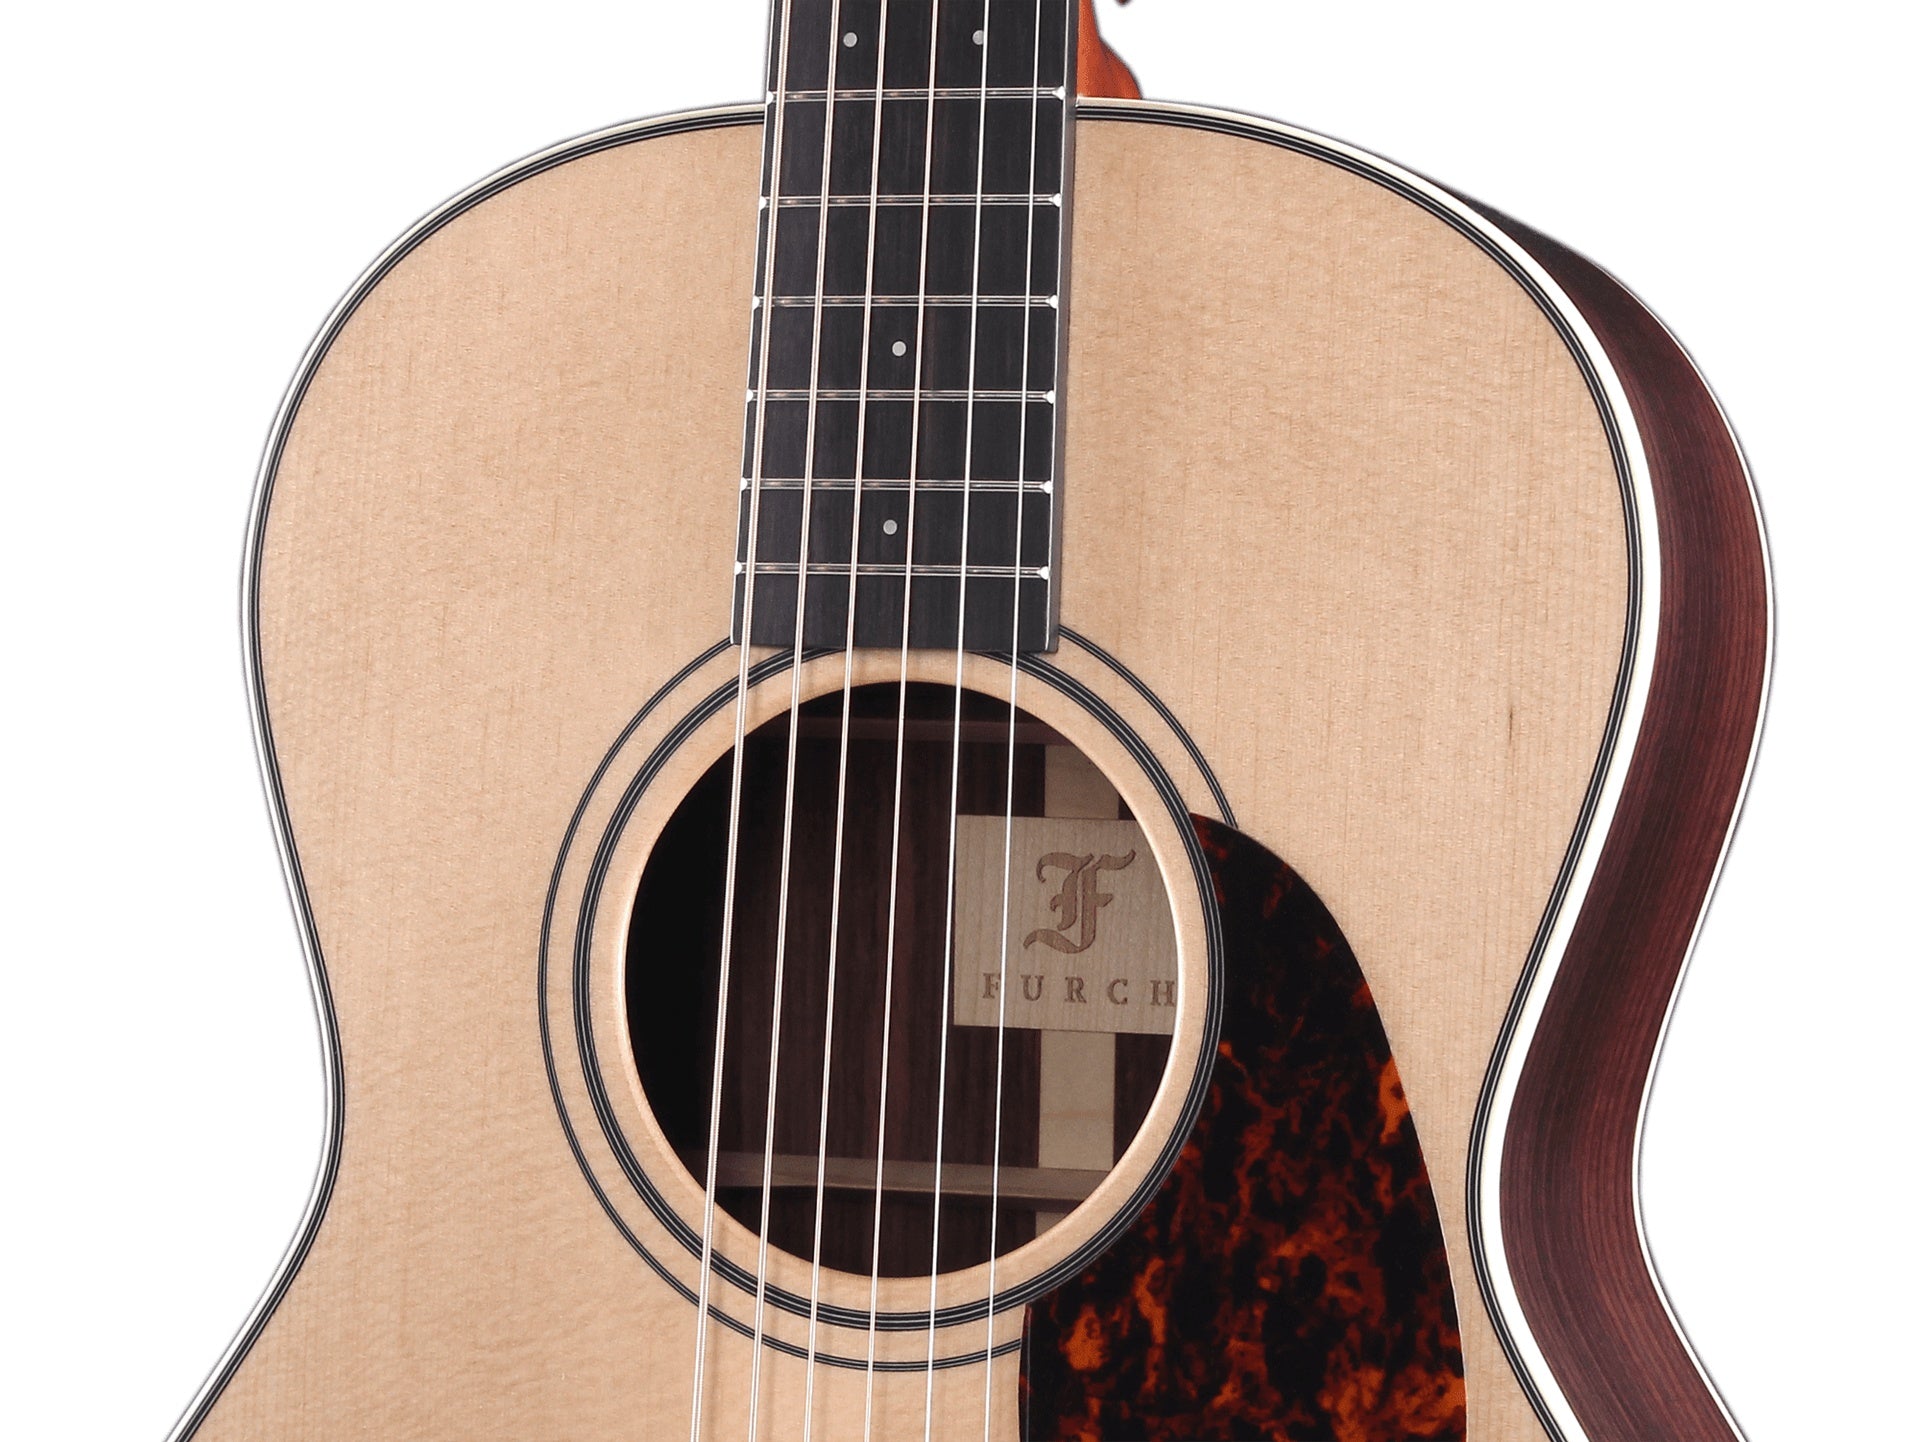 Furch Vintage 1 OOM-SR Acoustic Guitar, Acoustic Guitar for sale at Richards Guitars.